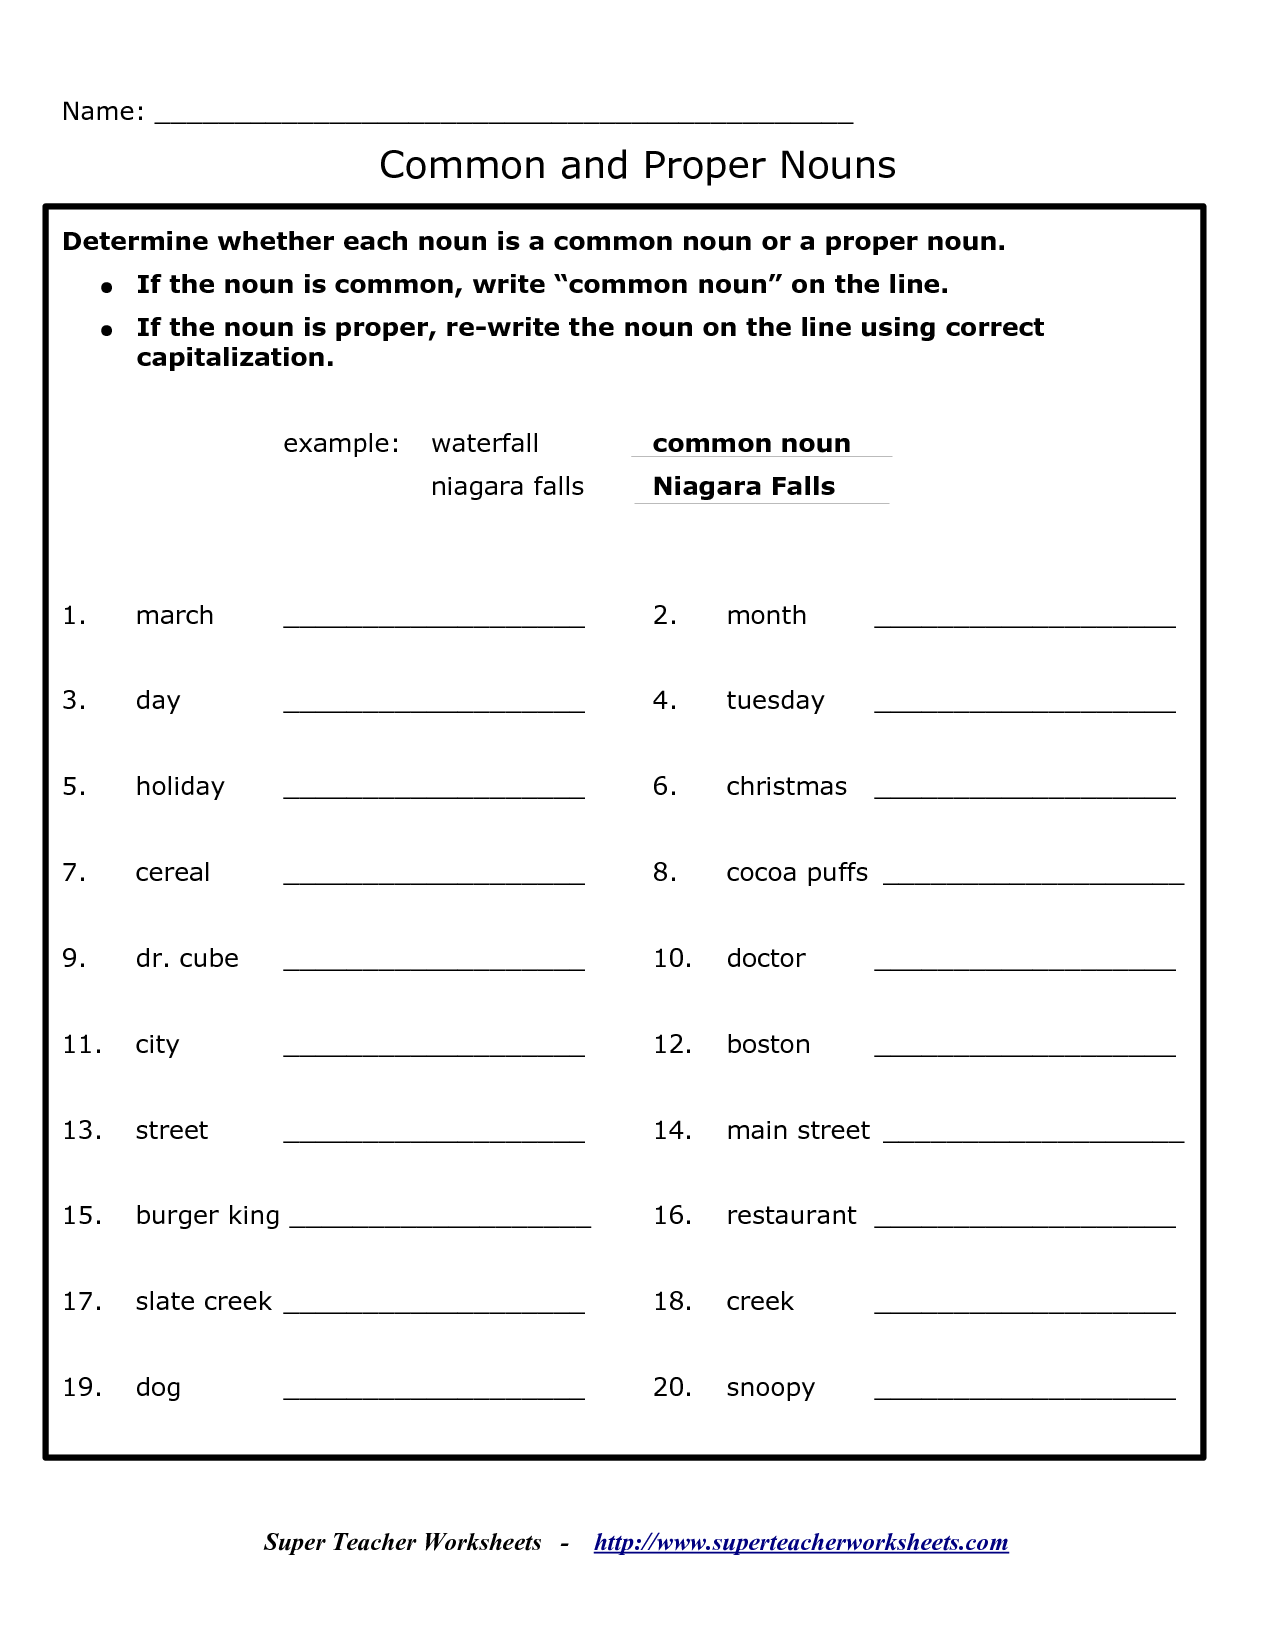 17-best-images-of-proper-common-nouns-worksheet-32nd-grade-common-and-proper-nouns-worksheets